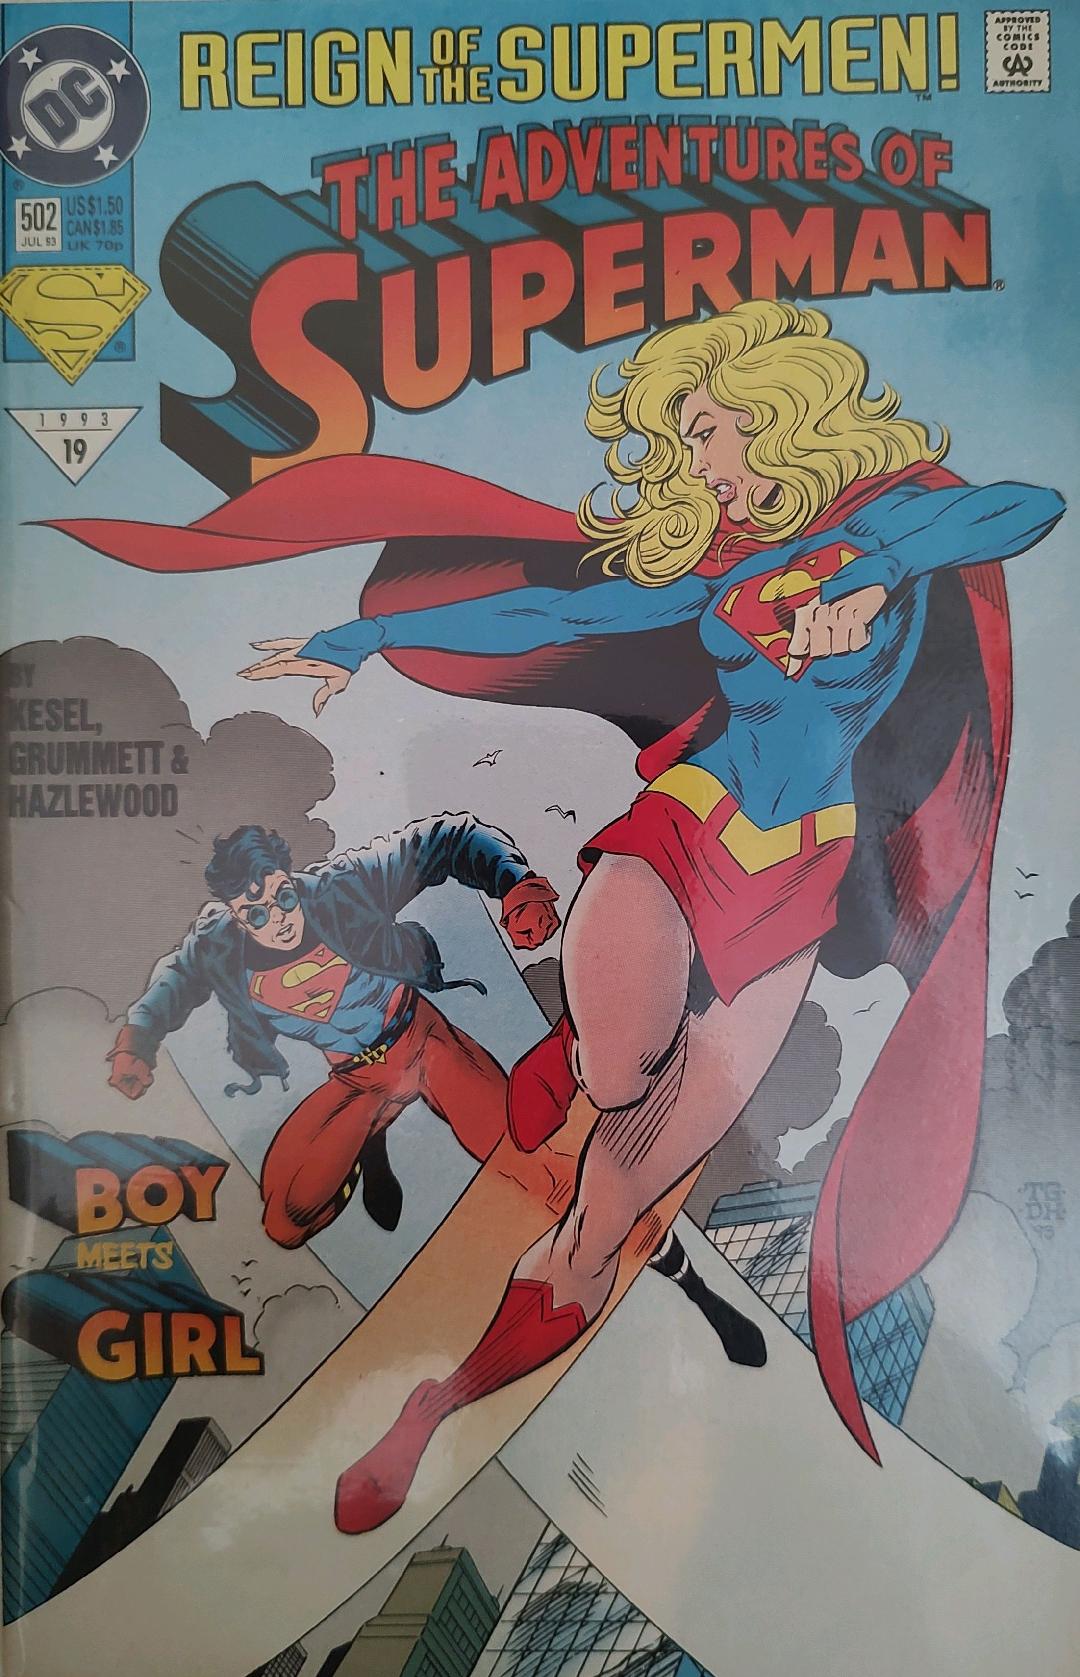 The Adventures of Superman #502 Comic Book